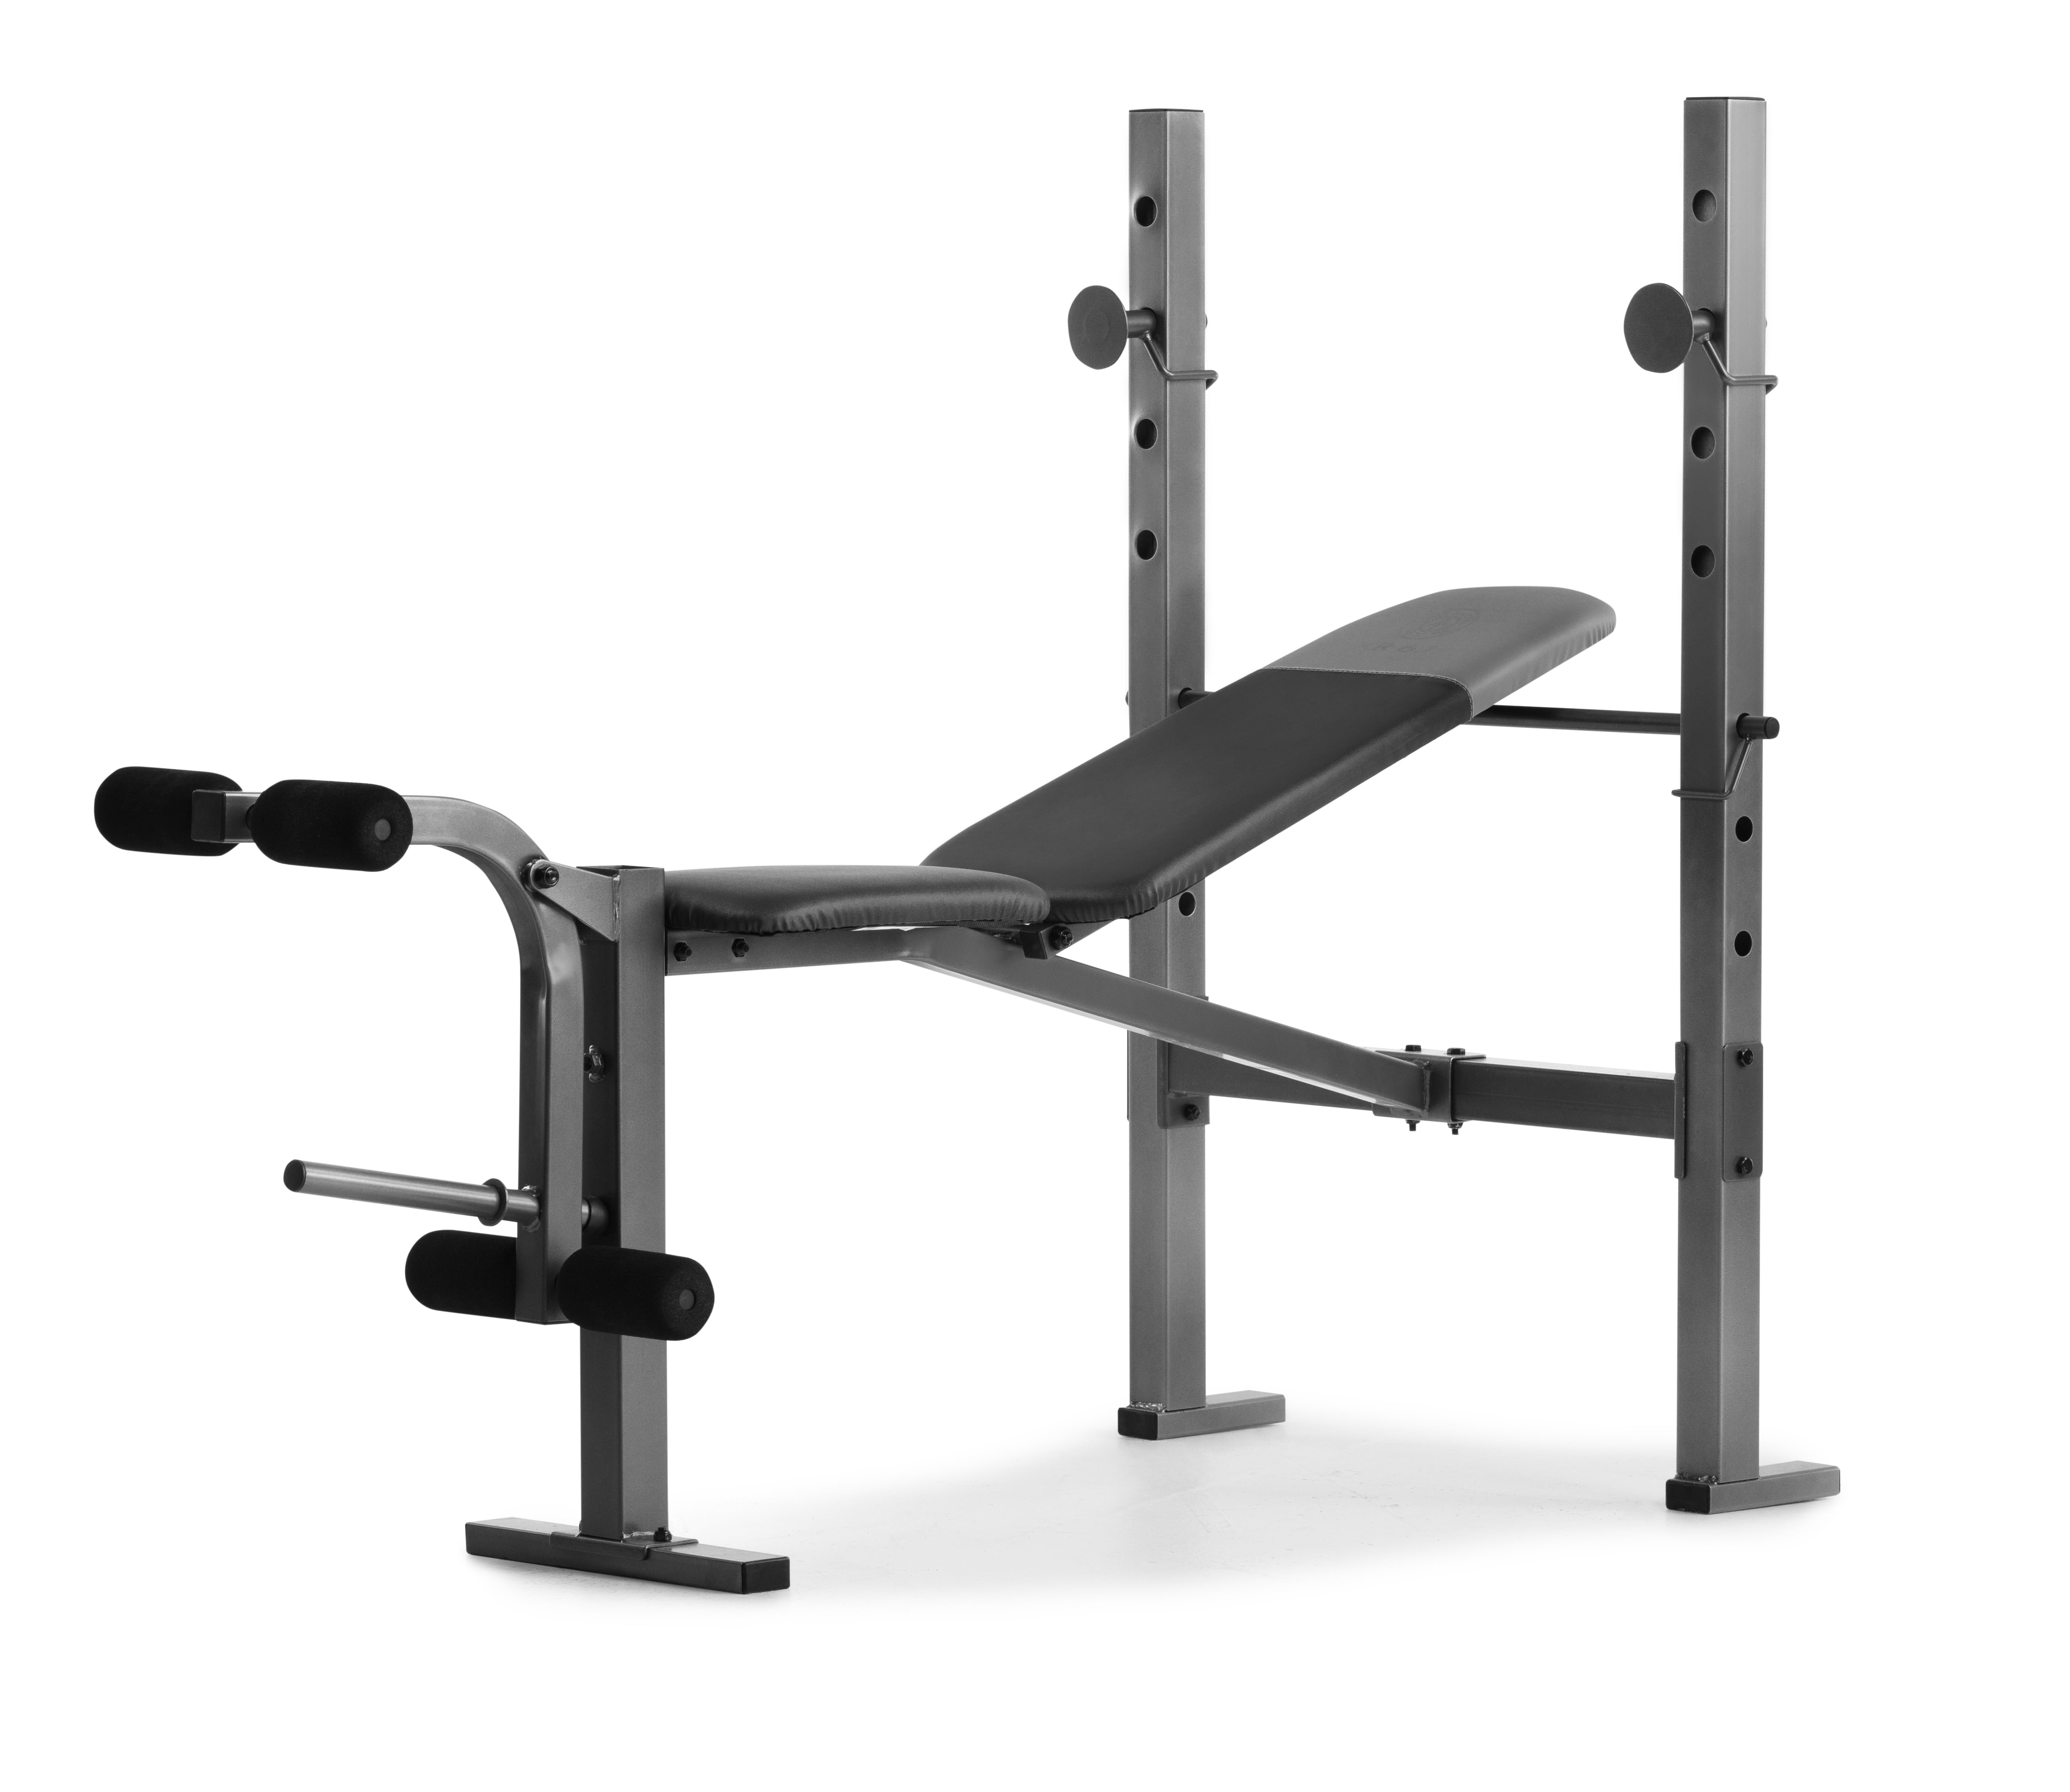 Golds Gym Xr 61 Multi Position Weight Bench With Leg Developer Walmartcom Walmartcom